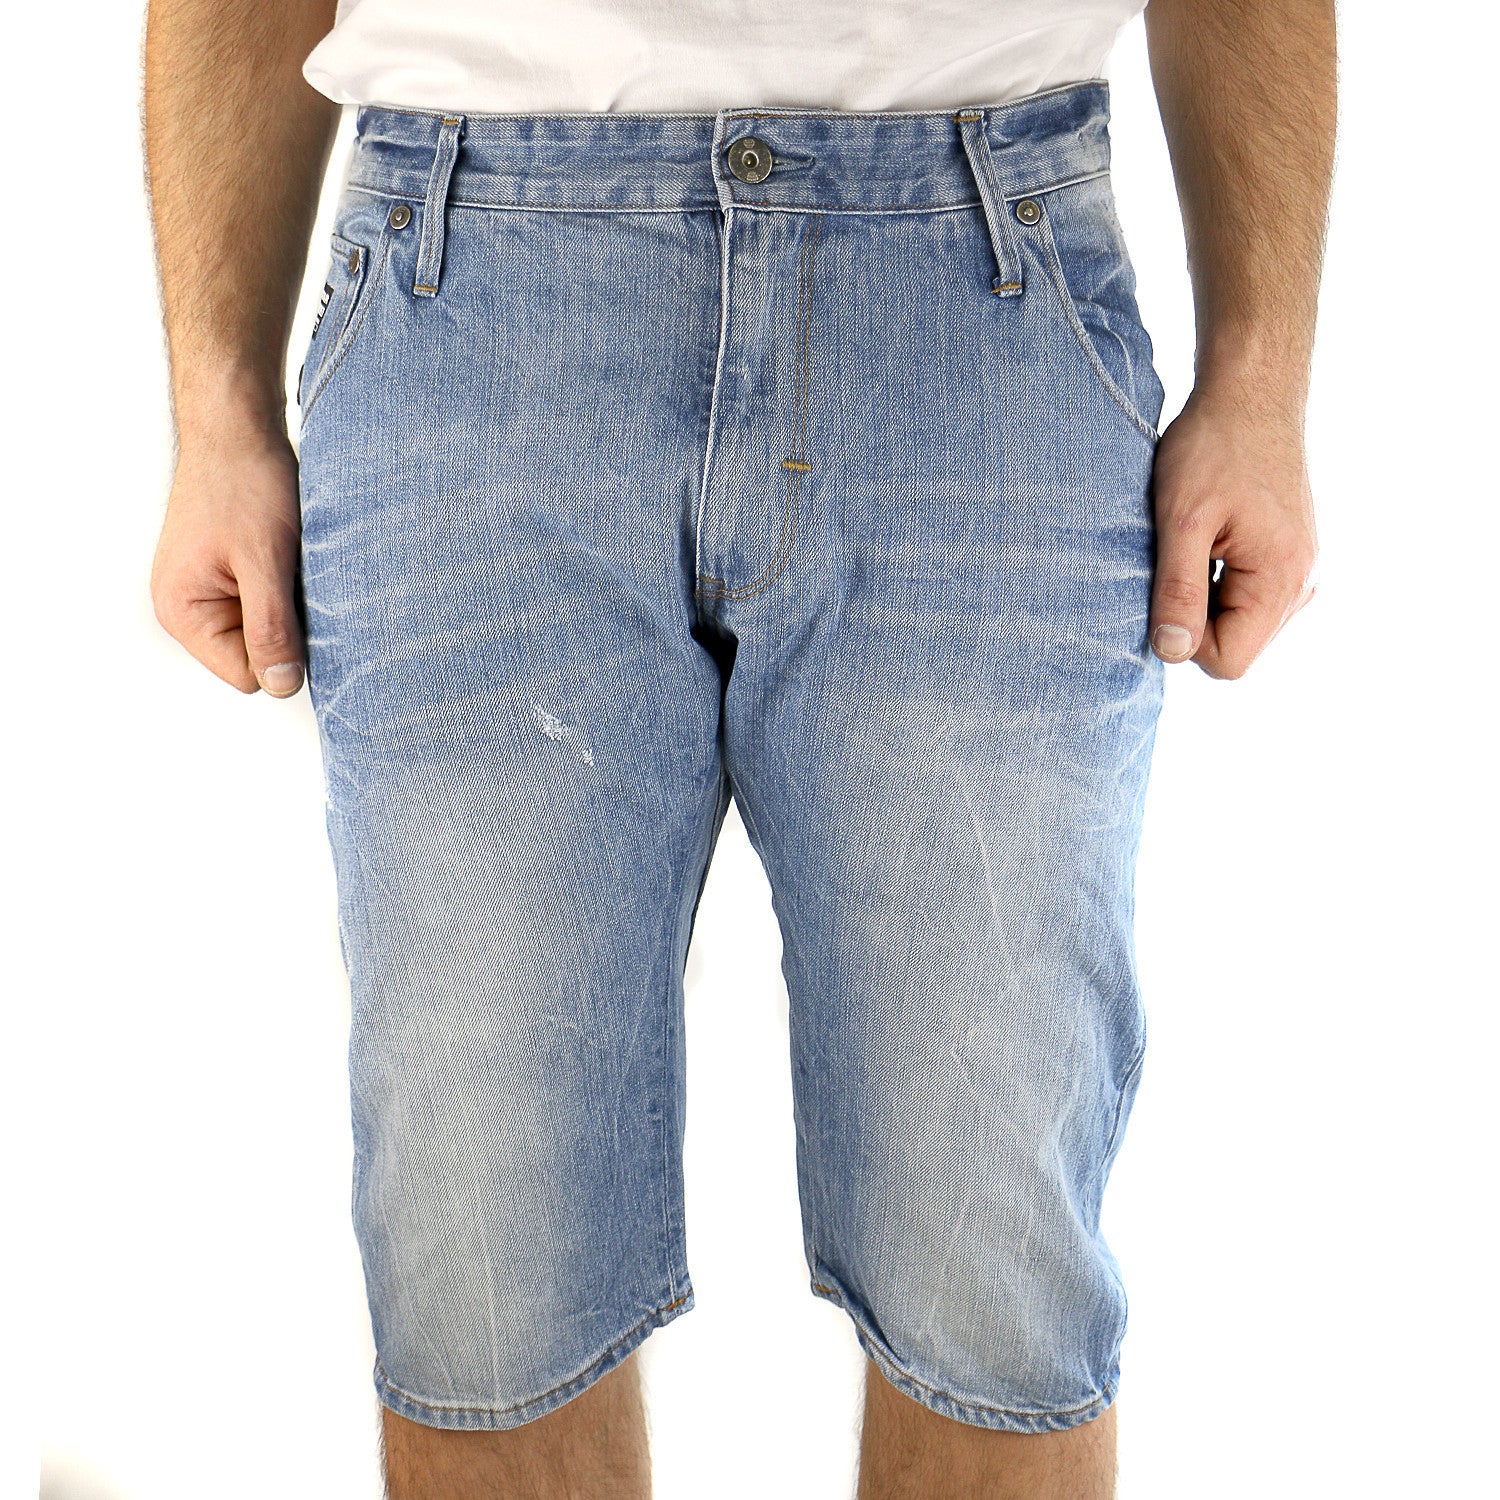 How to Wear Bermuda Shorts